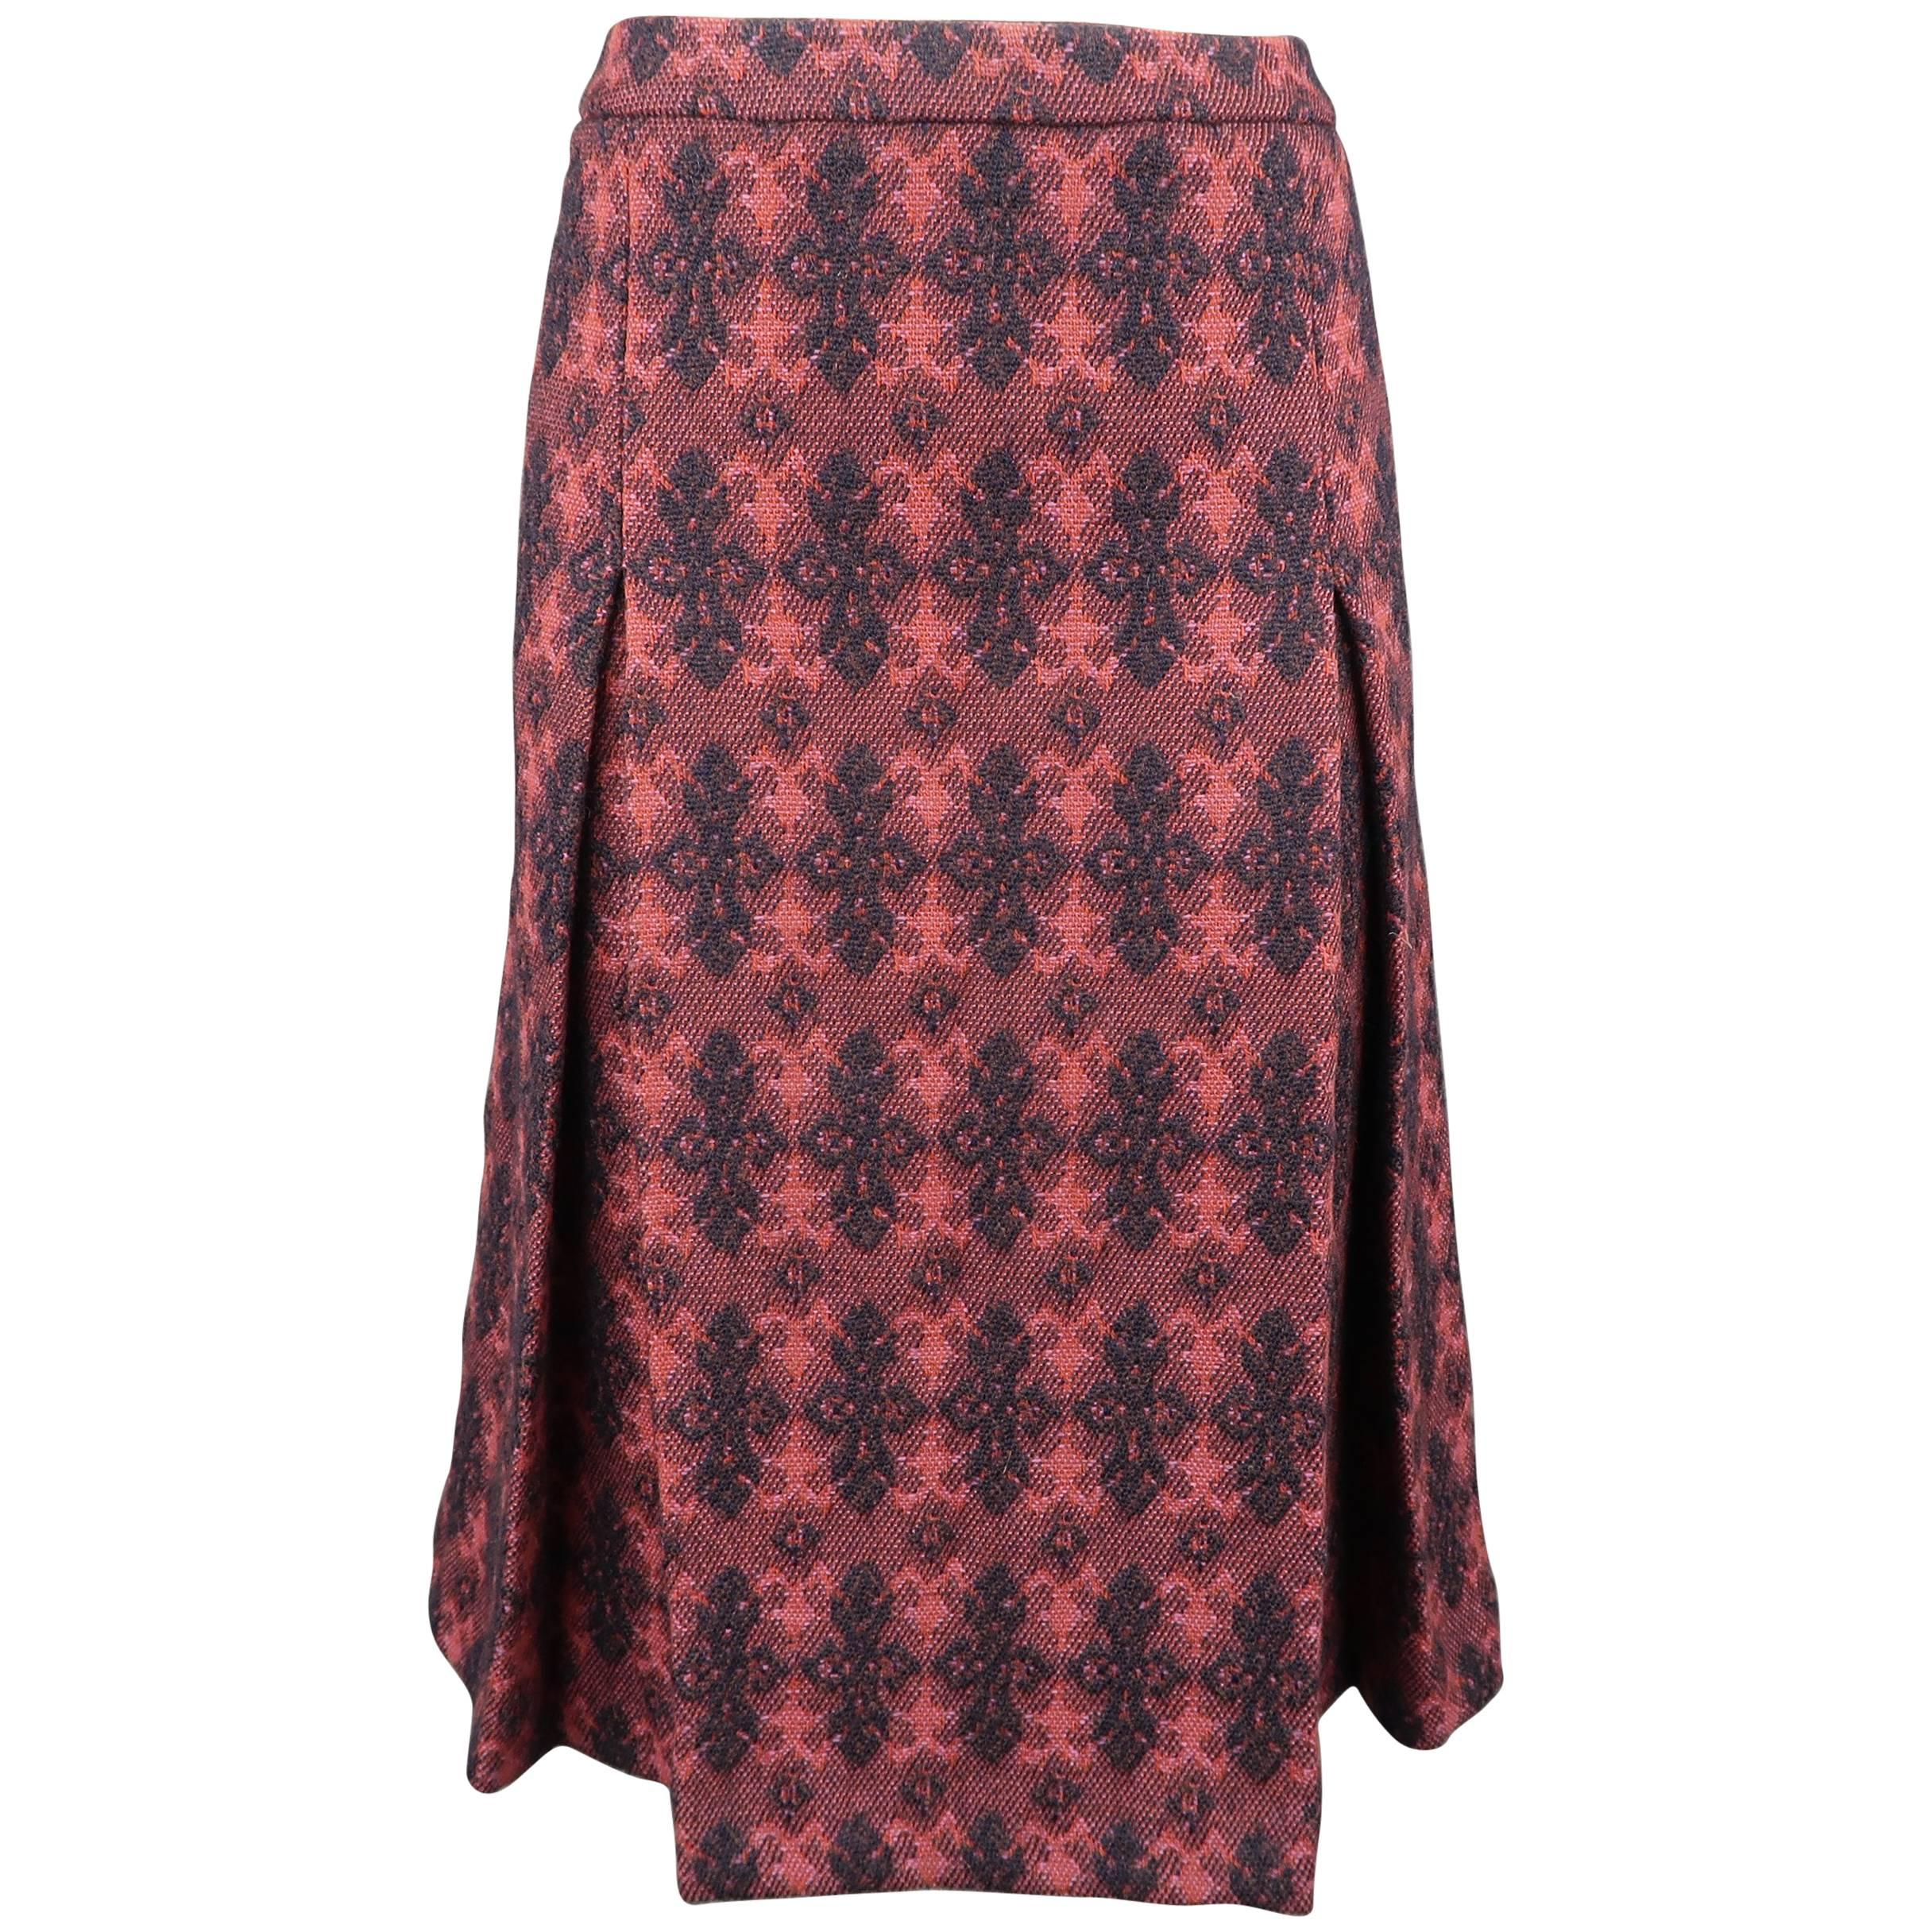 Miu Miu Burgundy Brocade Textured Virgin Wool Pleated Skirt